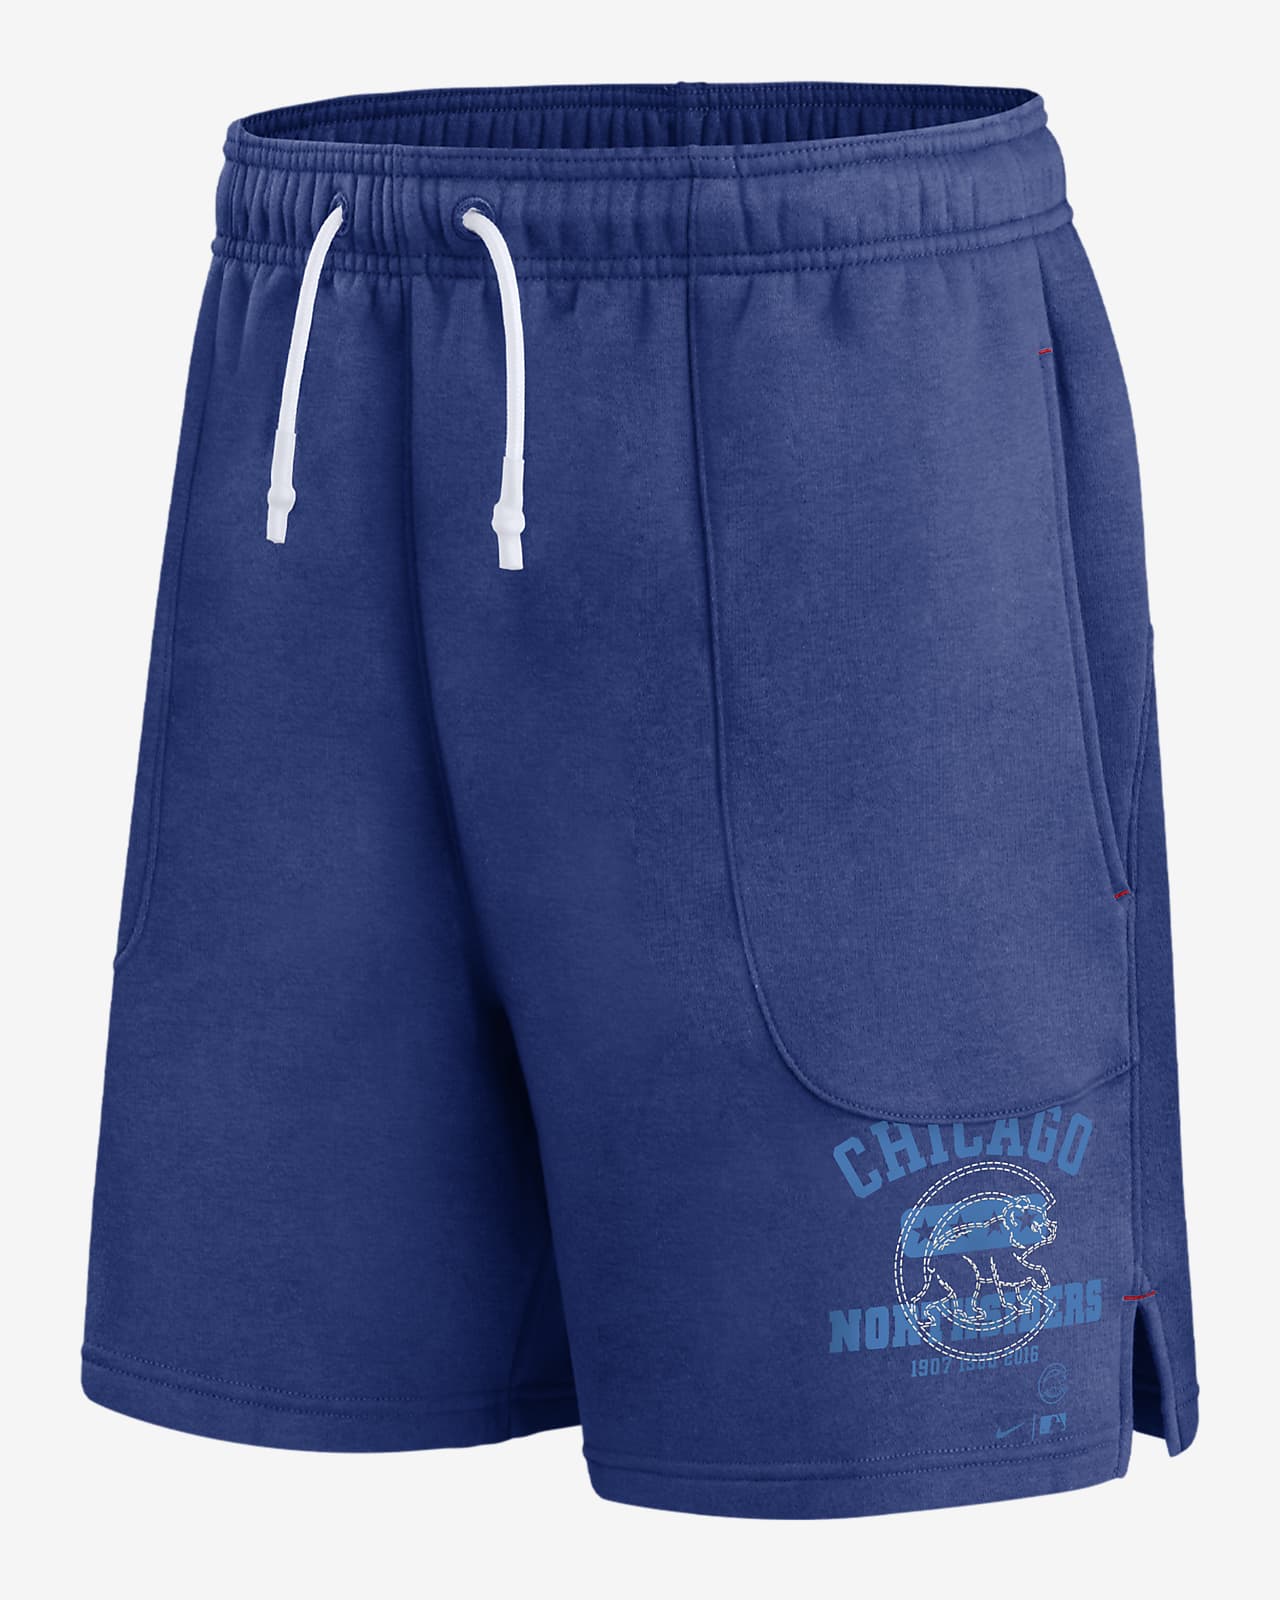 Nike Statement Ballgame (MLB Chicago Cubs) Men's Shorts.